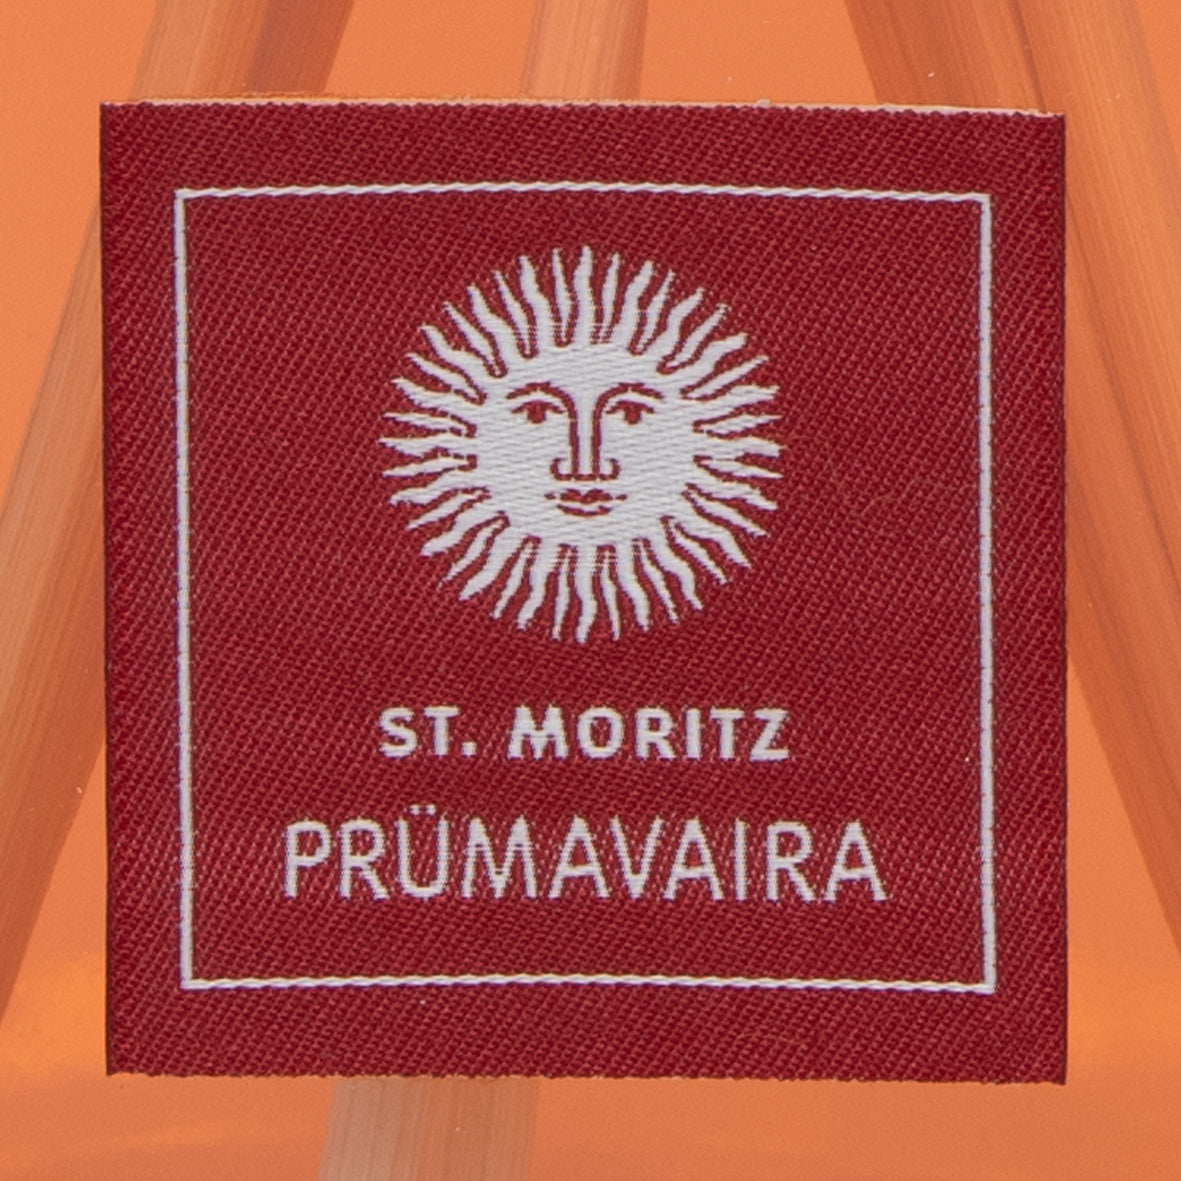 UDUR St.Moritz - PRÜMAVAIRA - Duo Set - Room Spray+Ceramic Sun